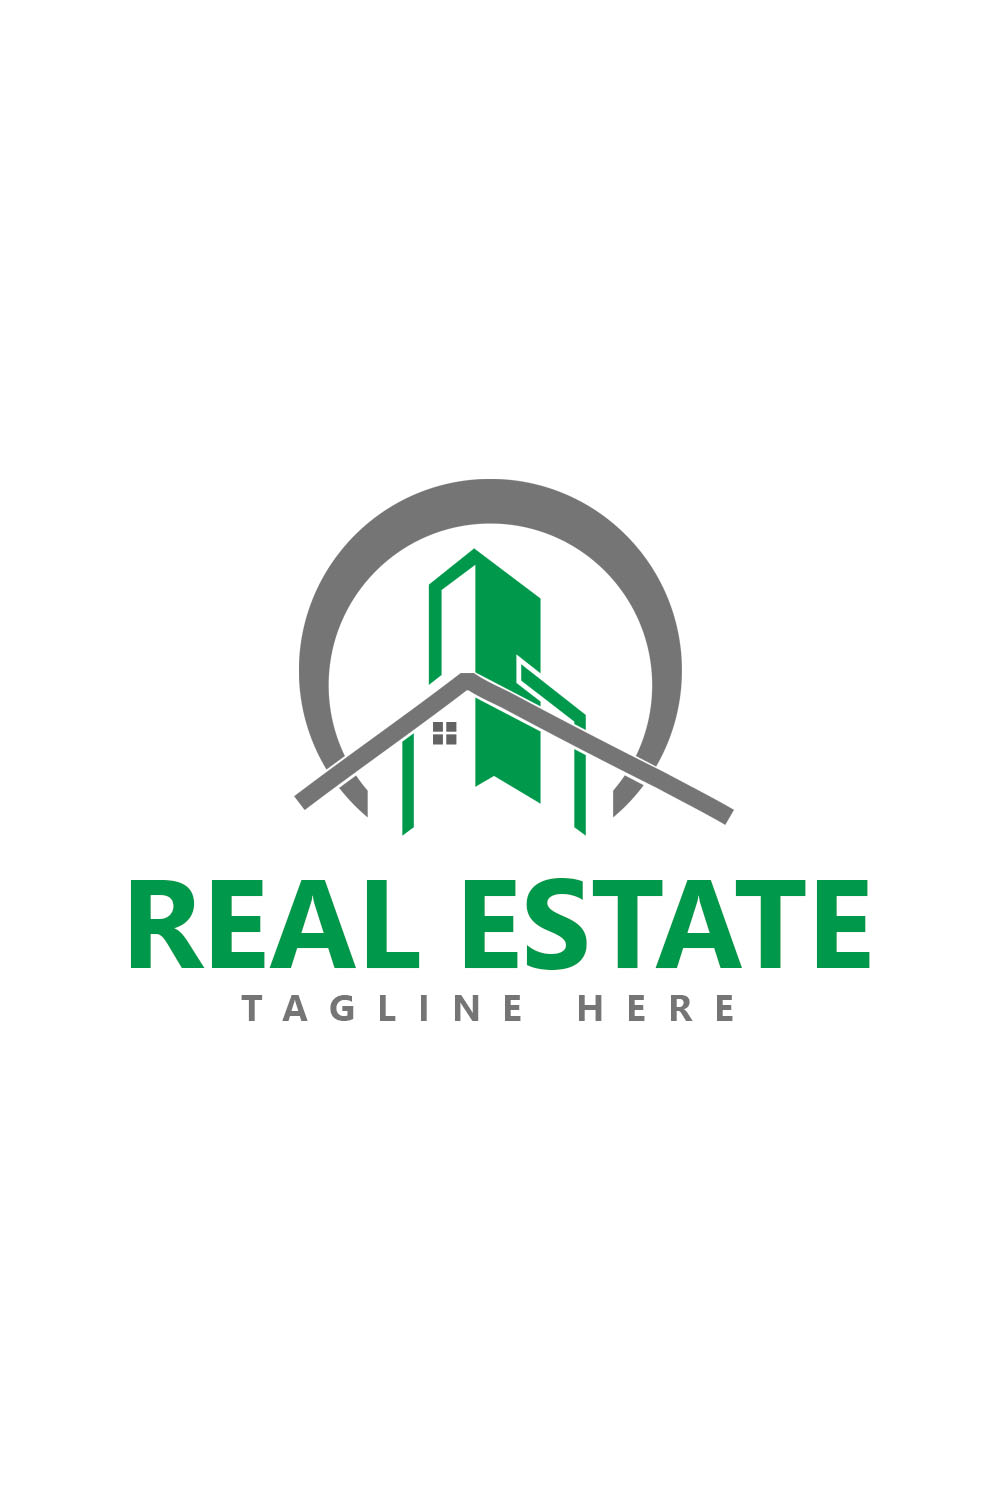 Real Estate Logo Template Pinterest.